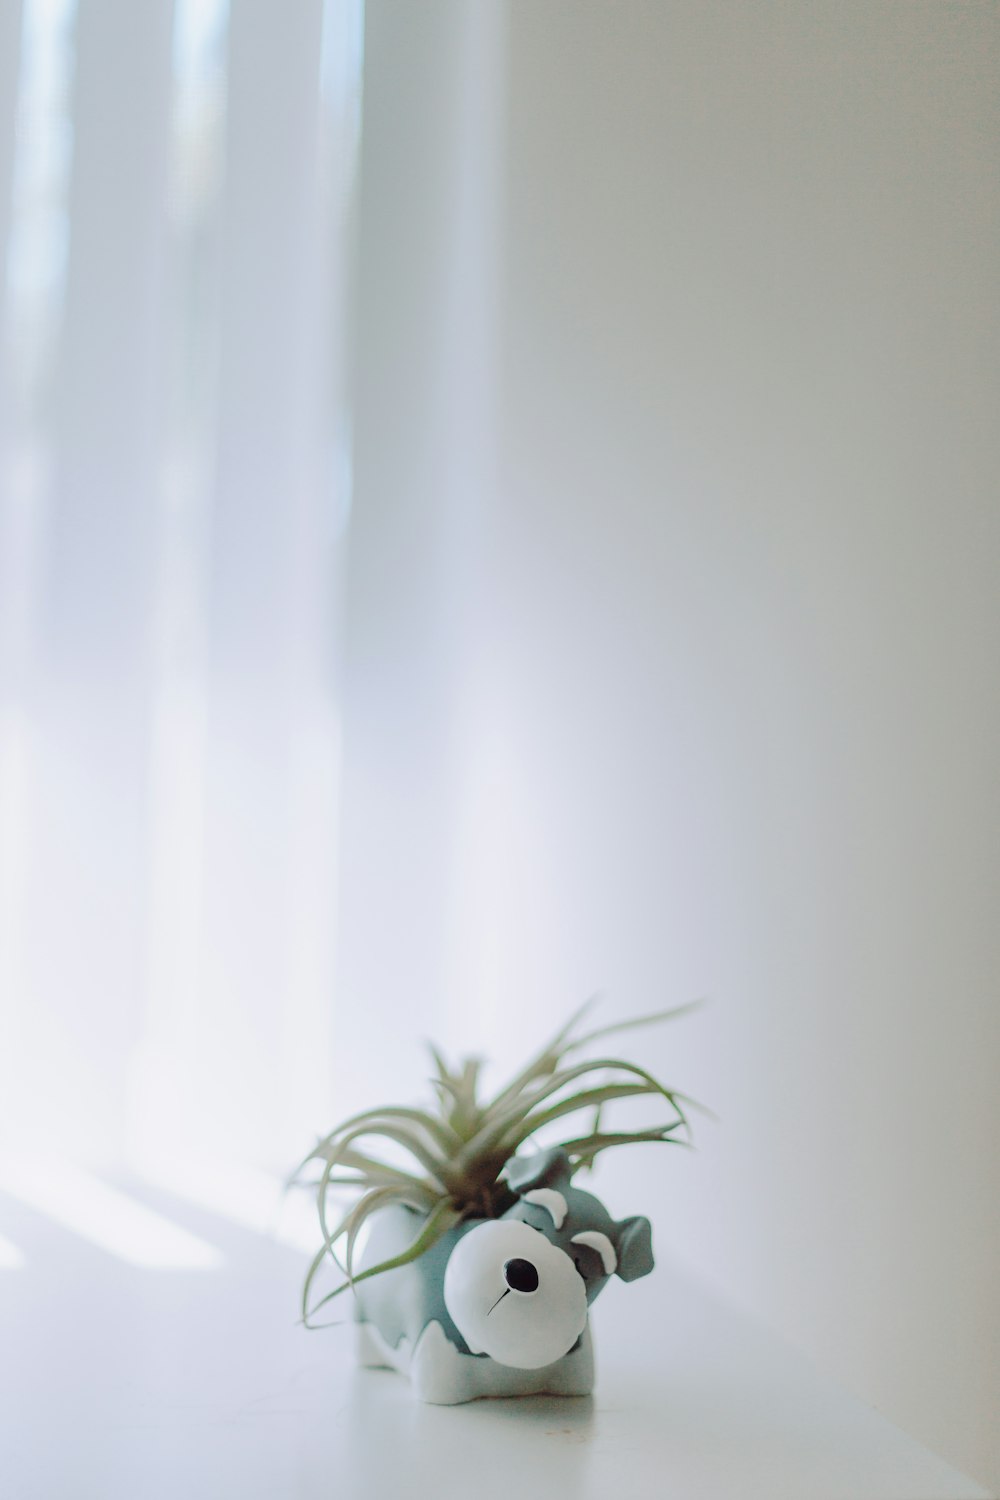 green plant near white window curtain